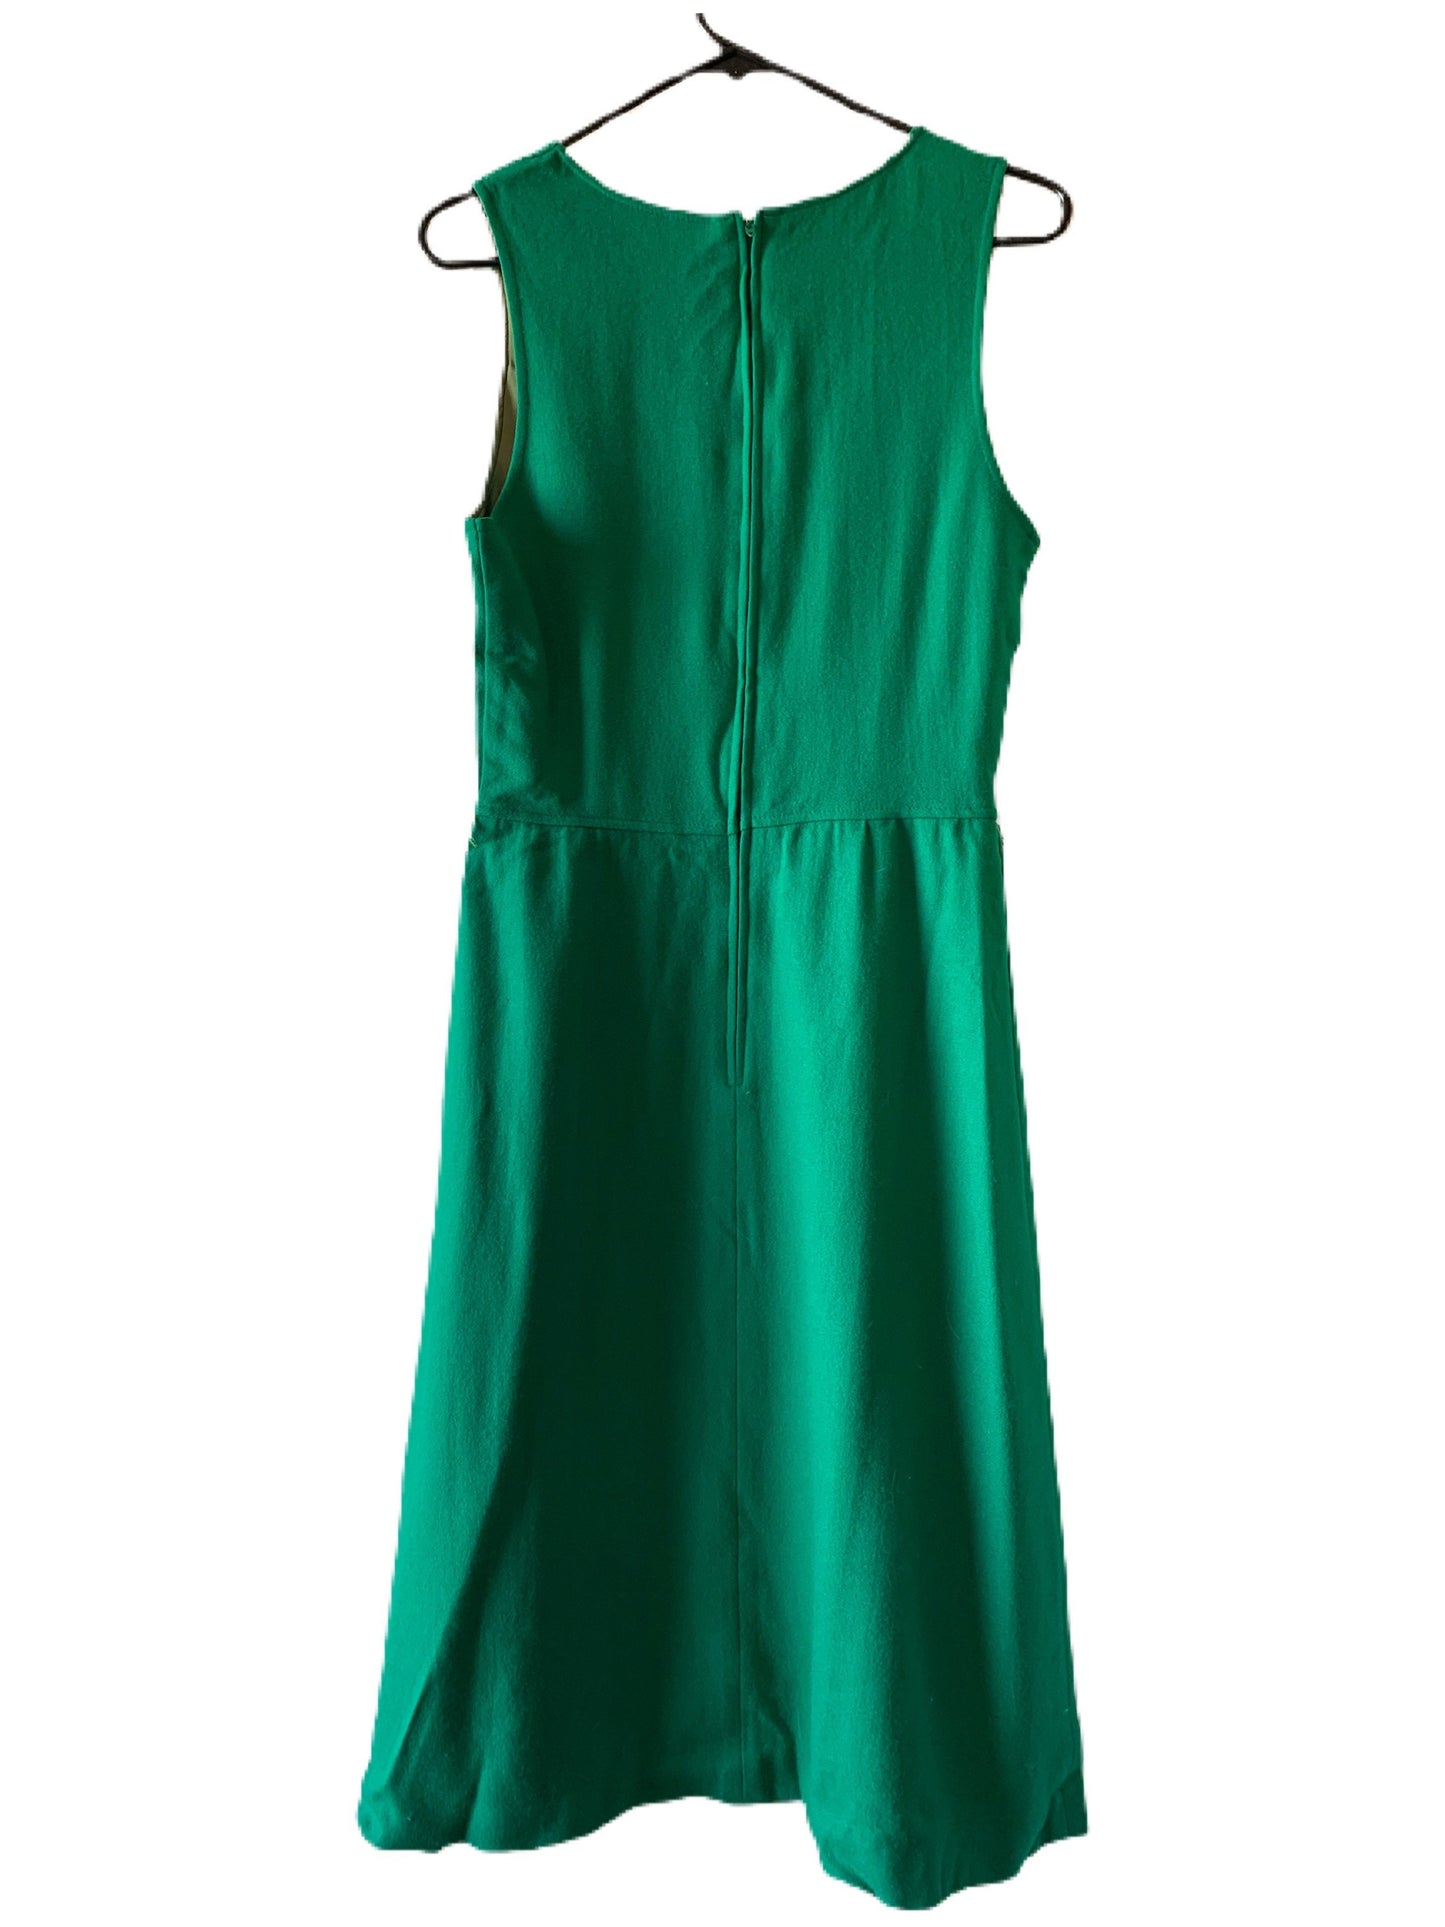 Vintage 1960's Emerald Dress